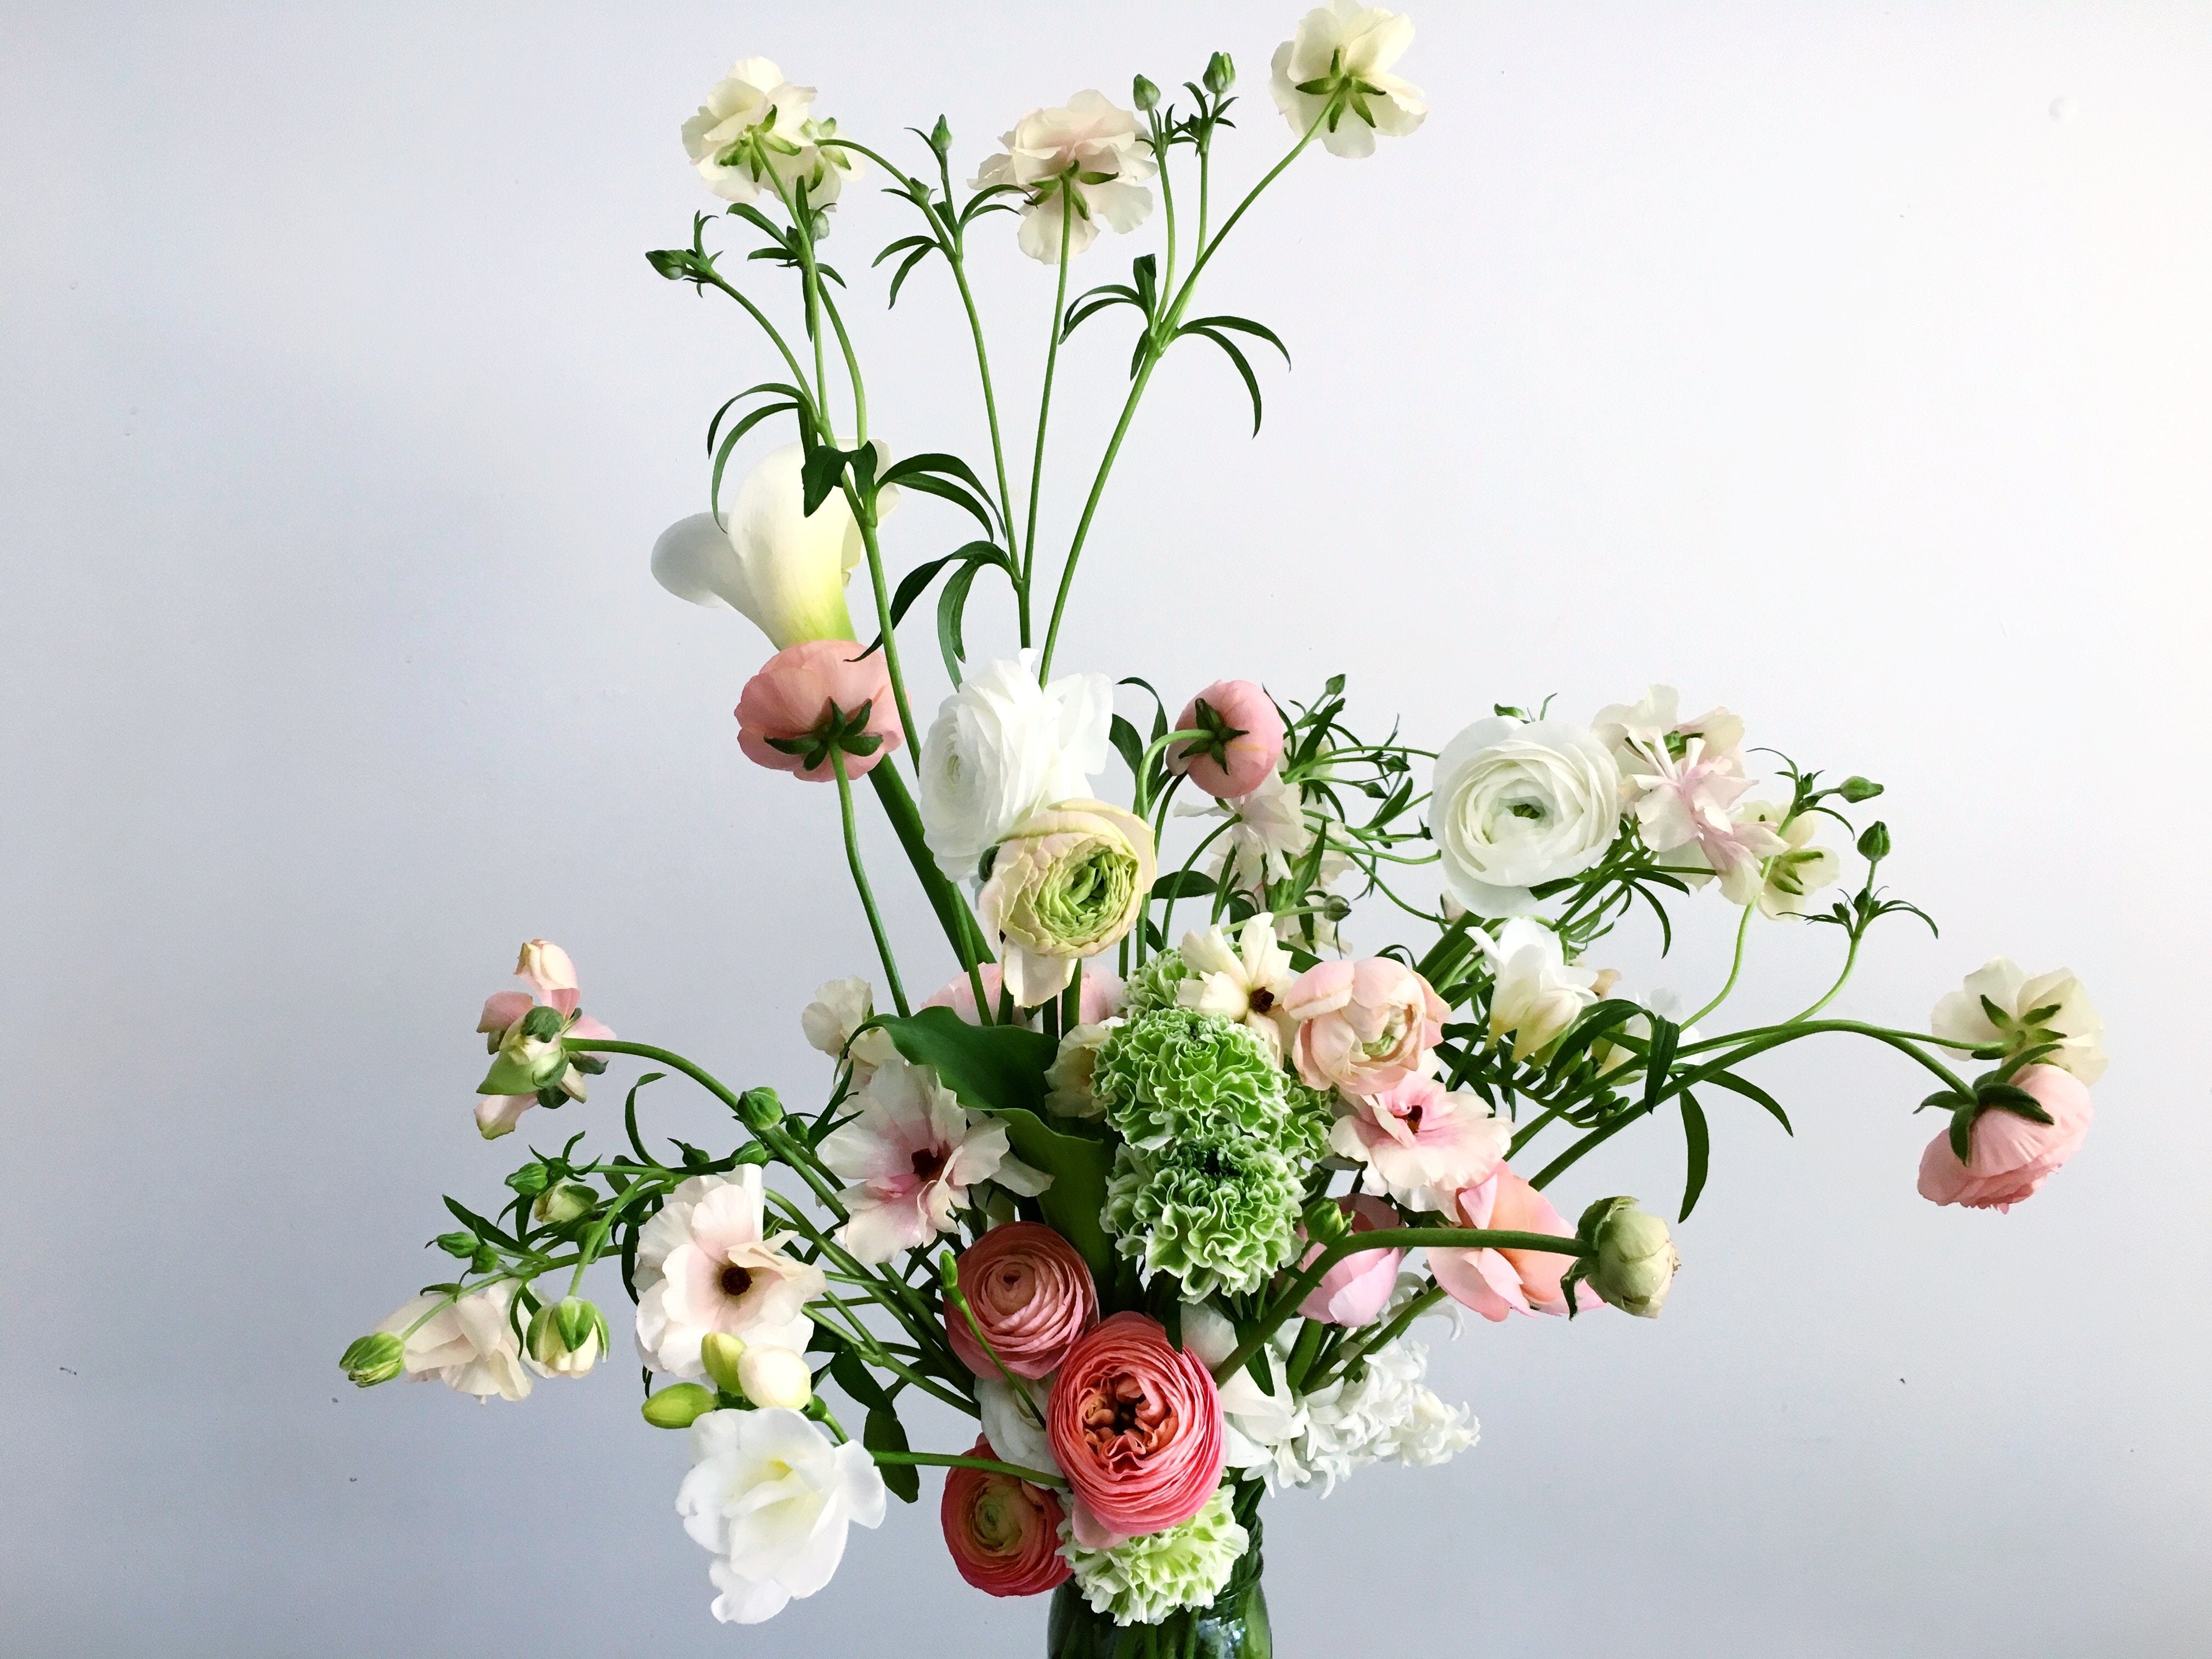 Ranunculus. Large Flower Arrangements for Delivery Vancouver, Washington and Portland, Oregon. Send Locally Grown Flowers.